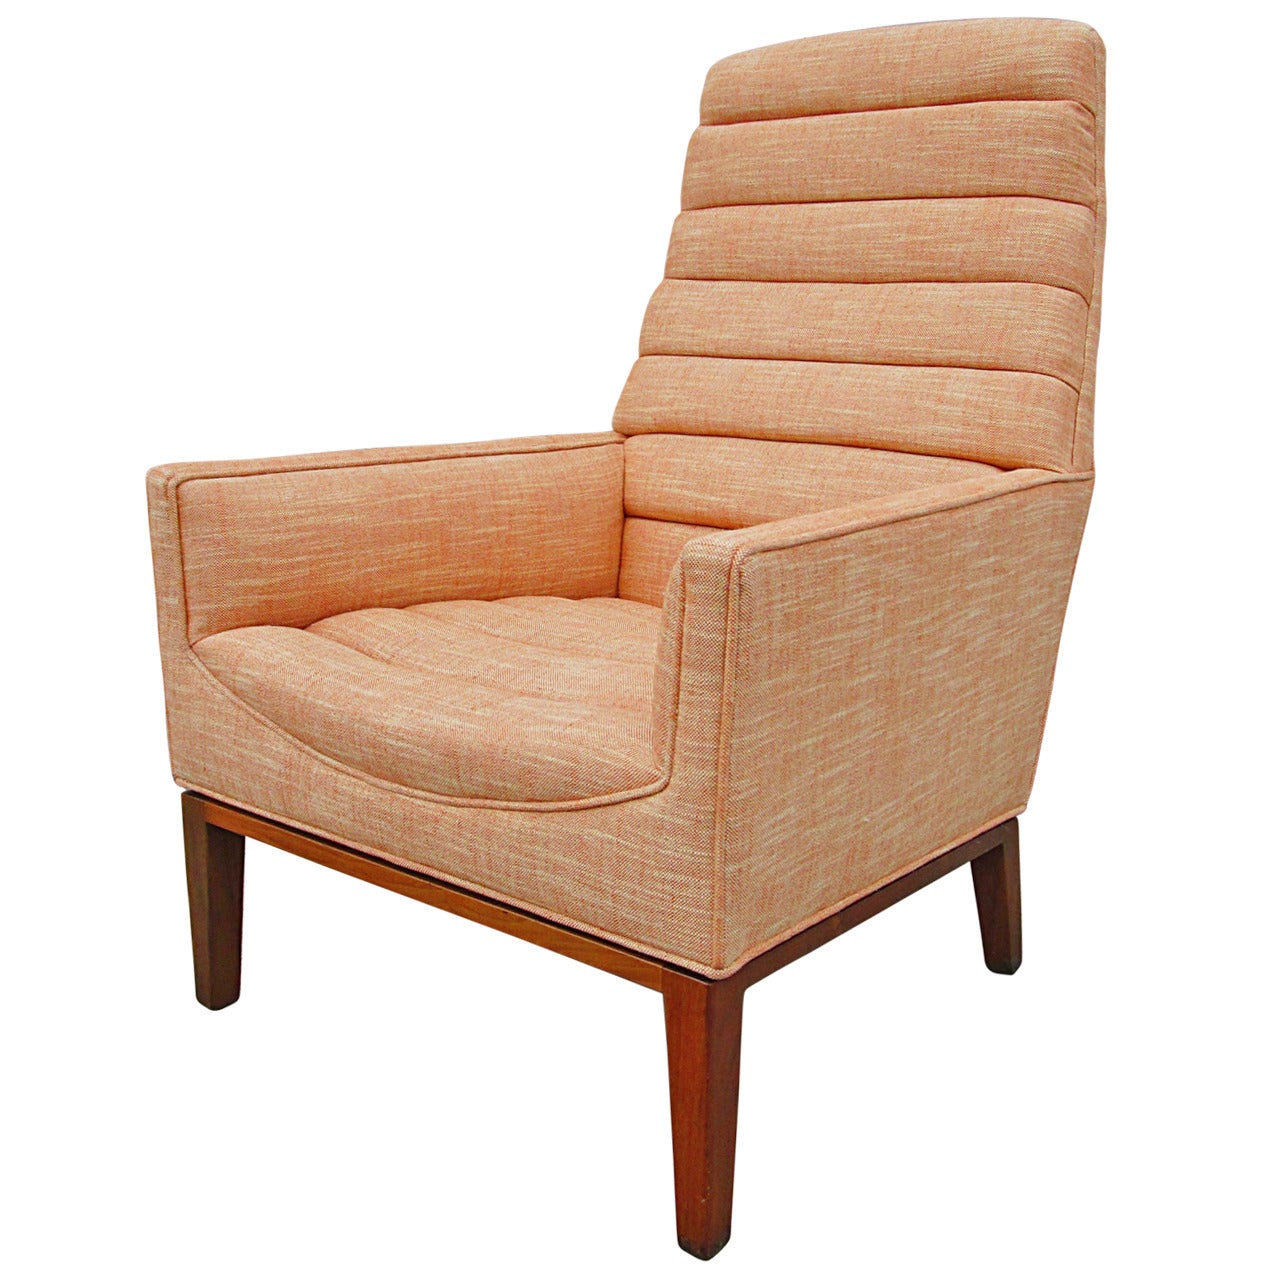 Dunbar Channel Back Lounge Chair